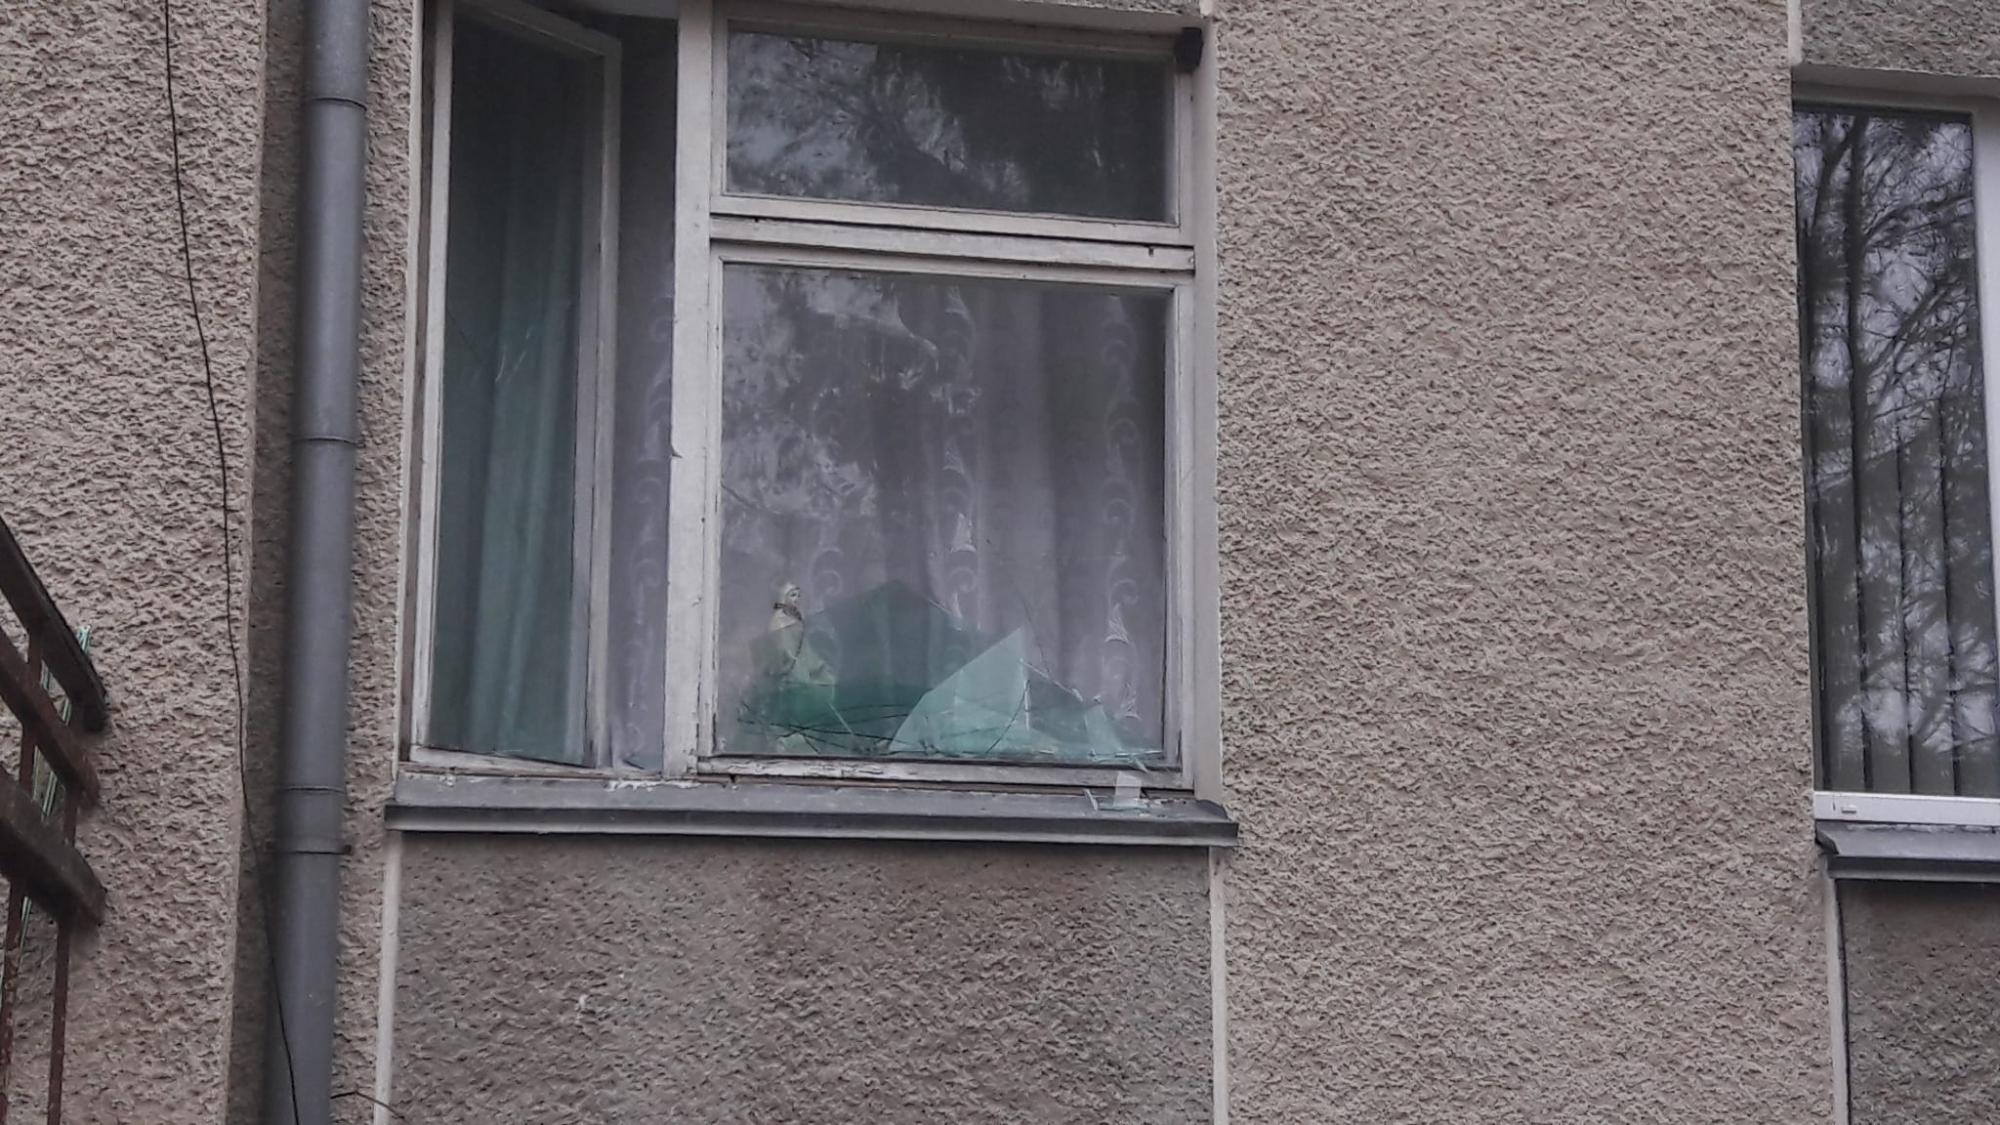 Во Львове мужчина разгромил больницу и избил пациентов: видео инцидента